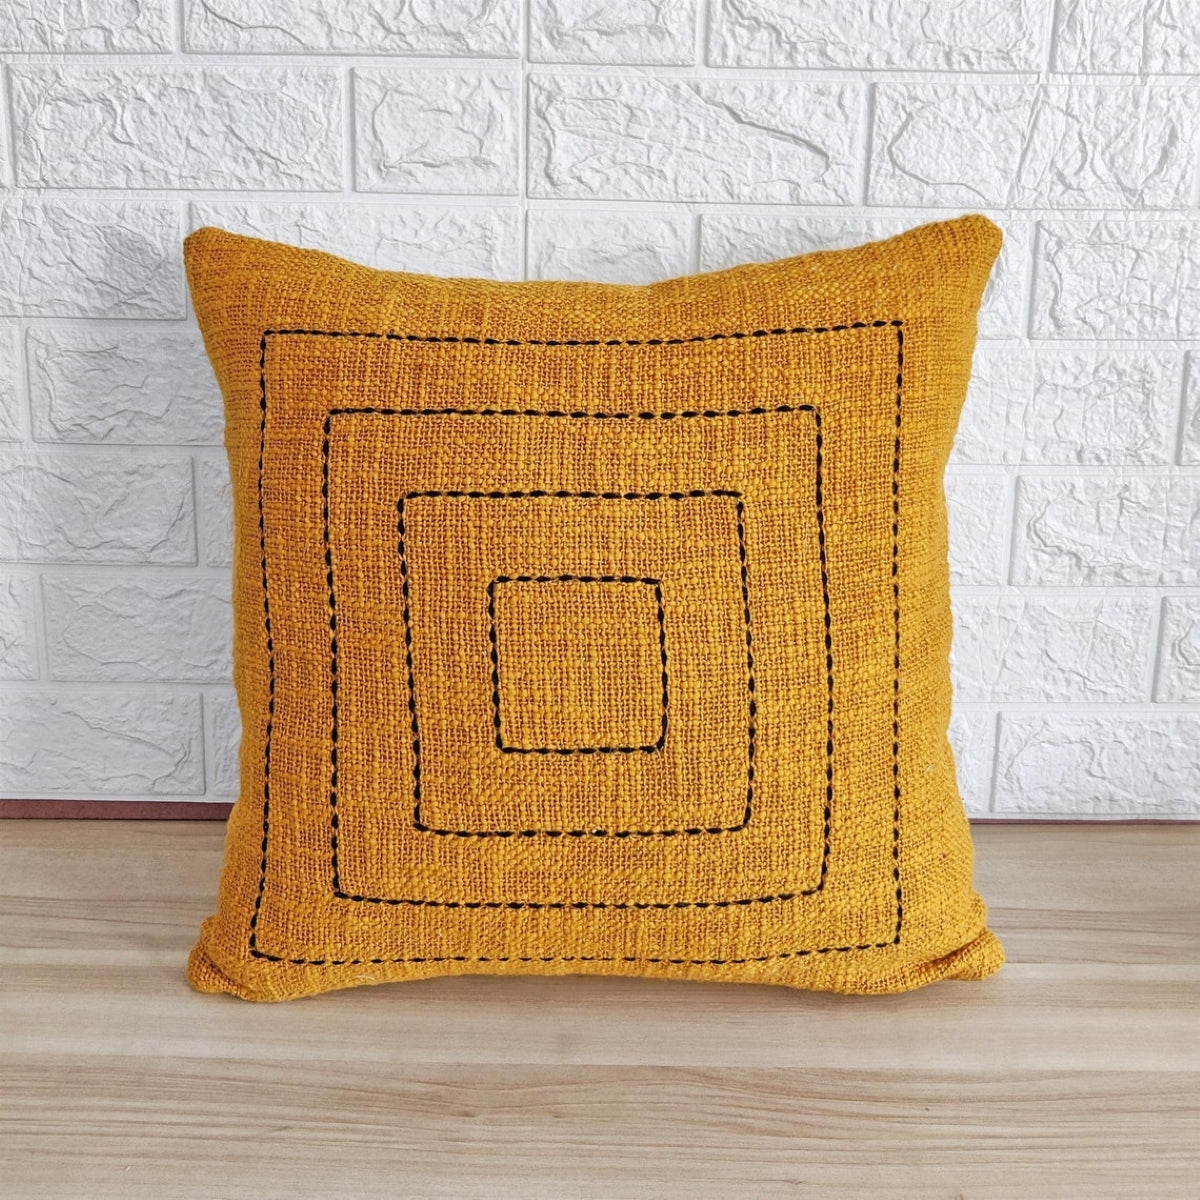 Mustard Yellow Kantha Square Design Cushion Cover